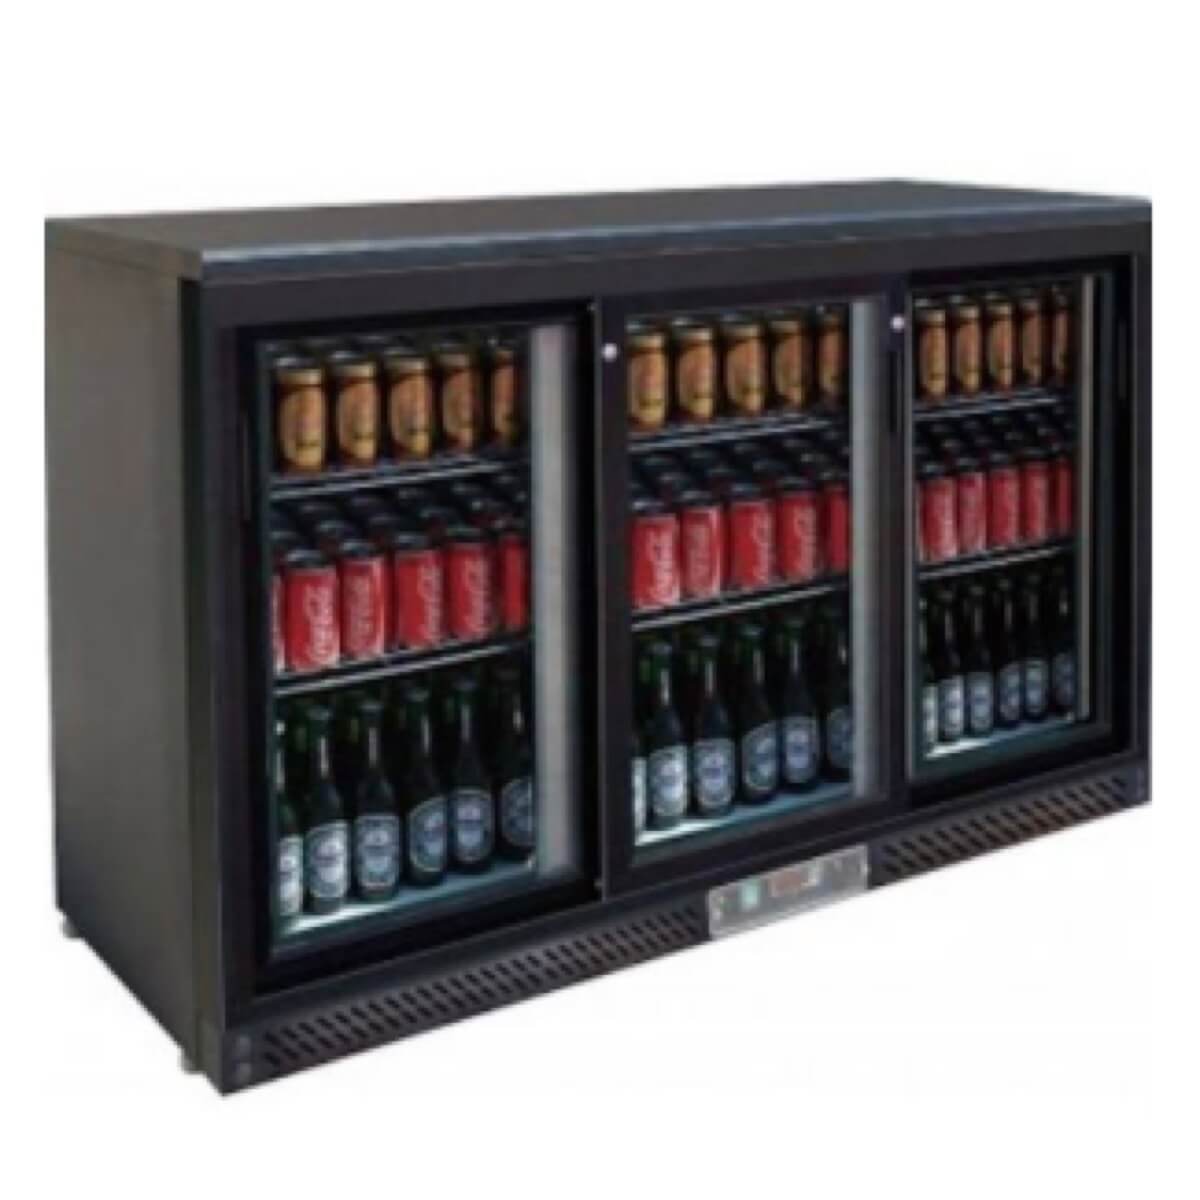 Refrigerated back bar